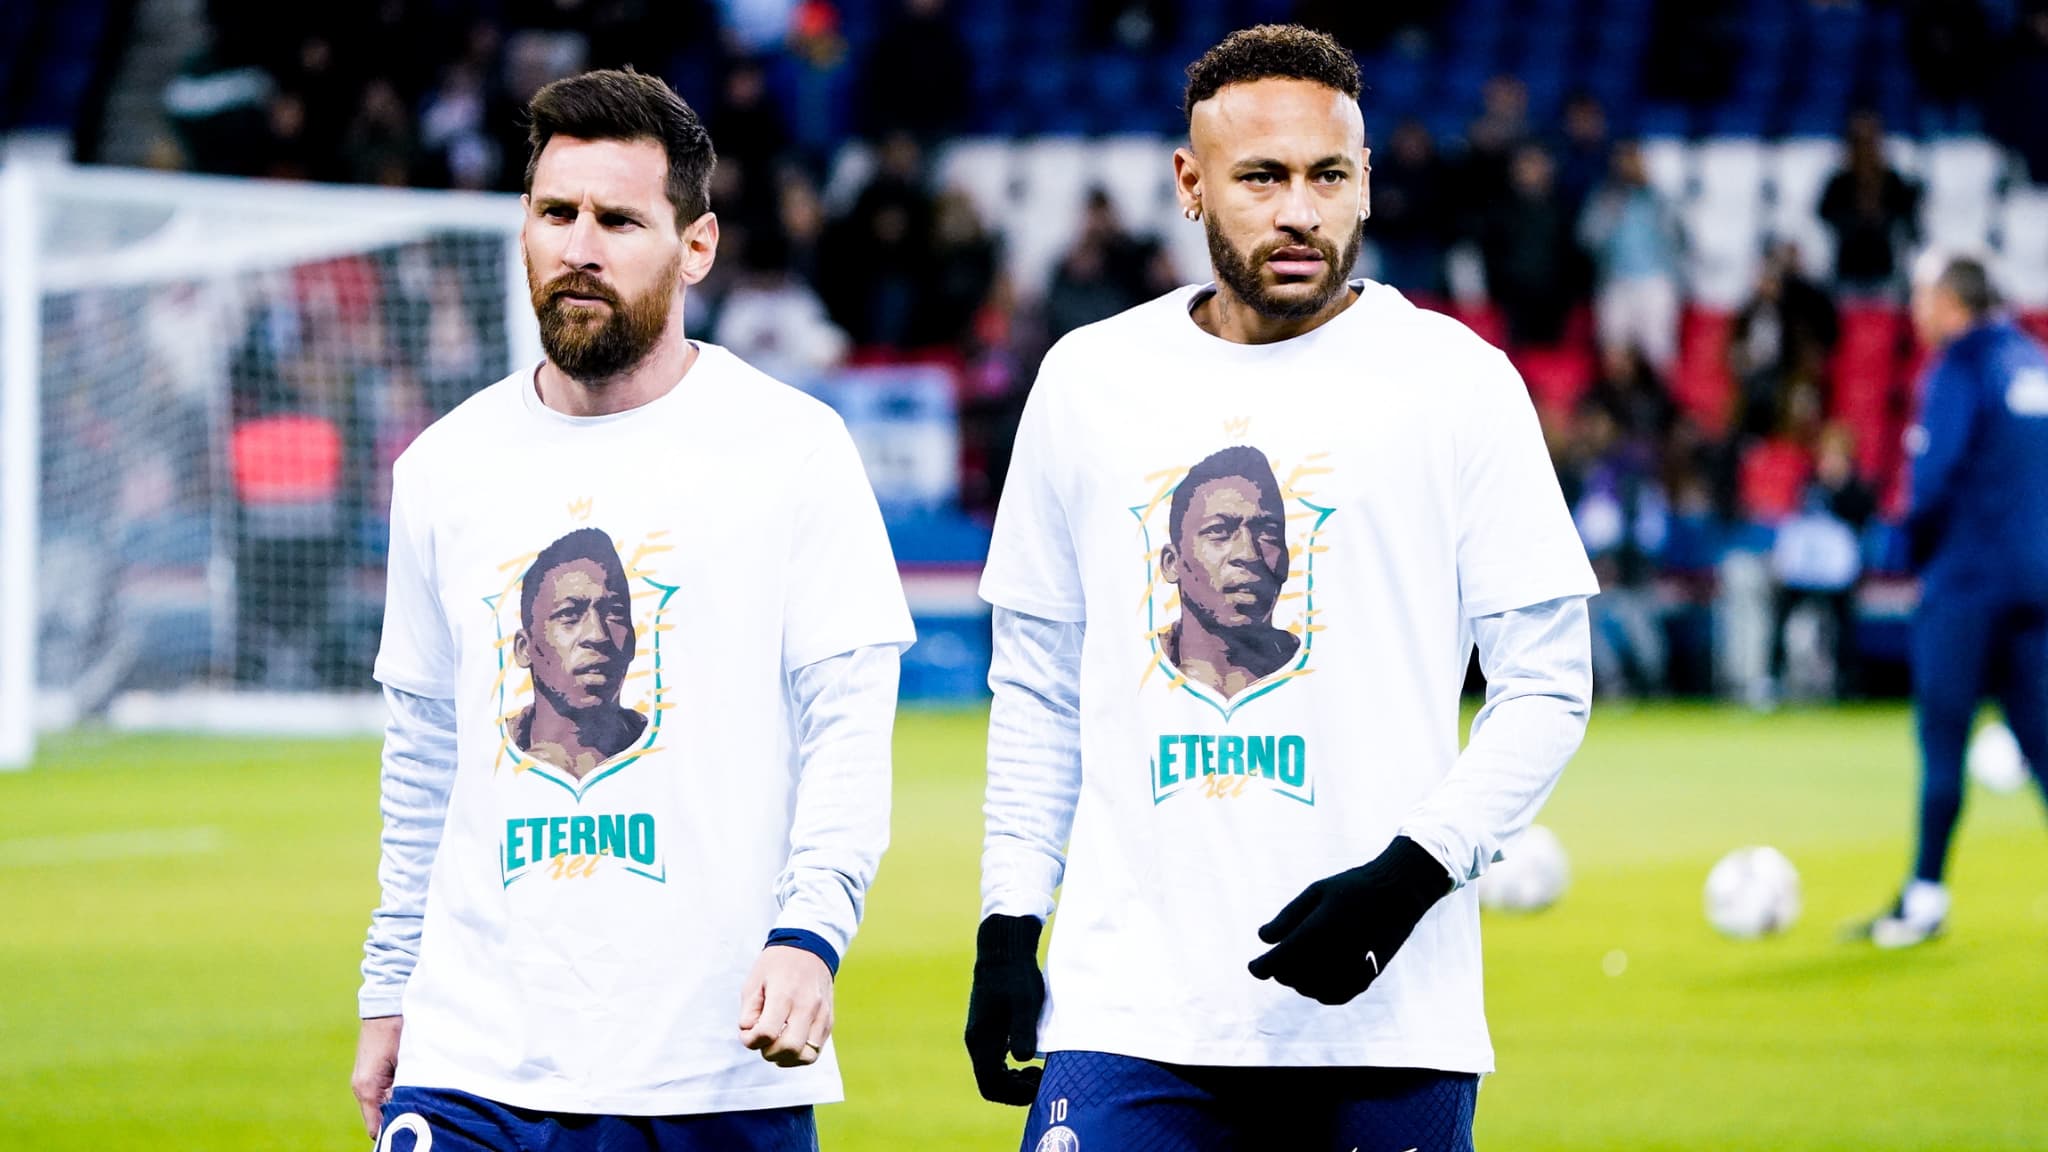 The Parisians applauded Pele before kick-off